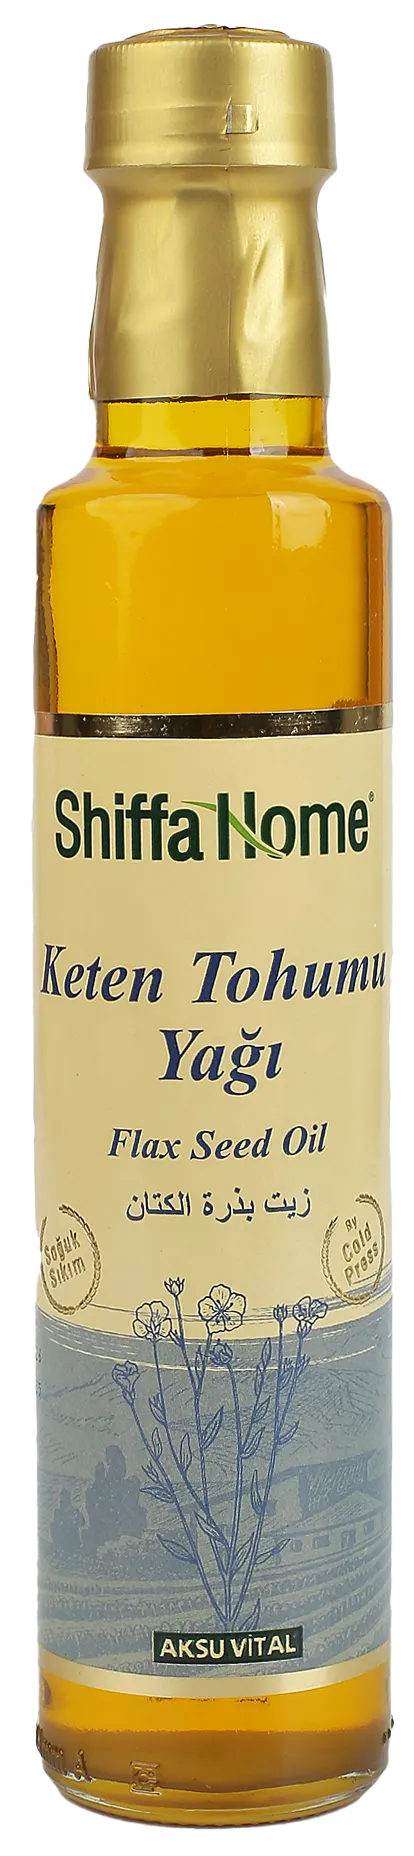 Shiffa Home - Keten Tohumu Yağı 250 ml.